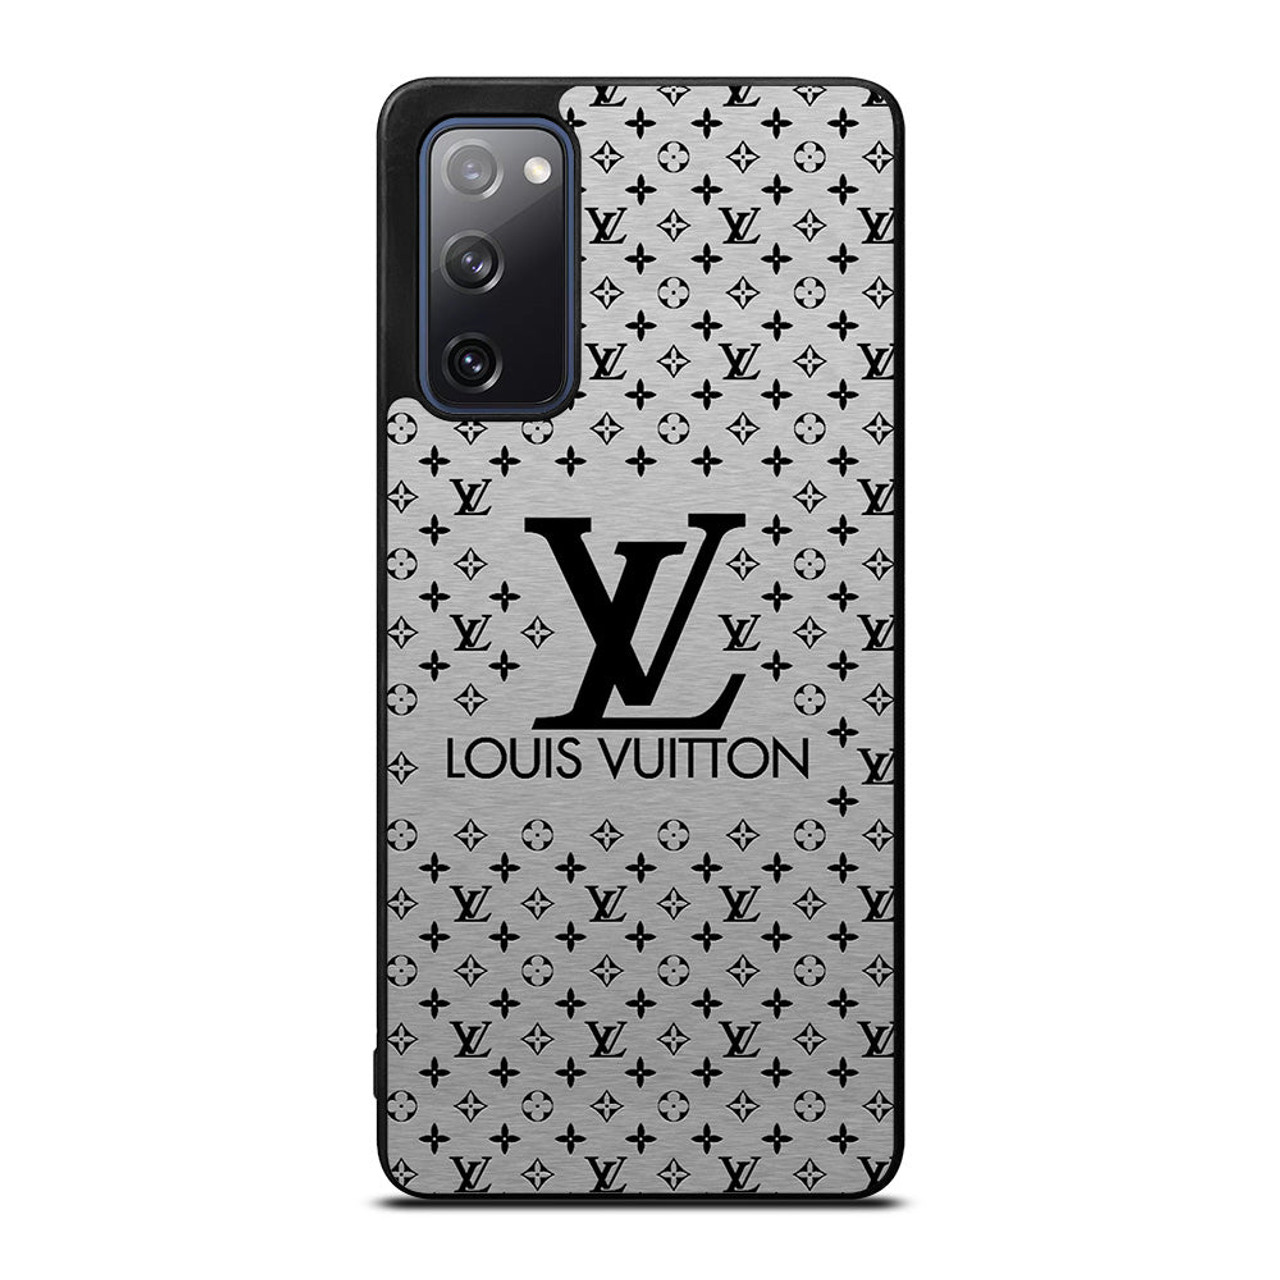 LOUIS VUITTON PATTERN LV Samsung Galaxy S20 FE Case Cover